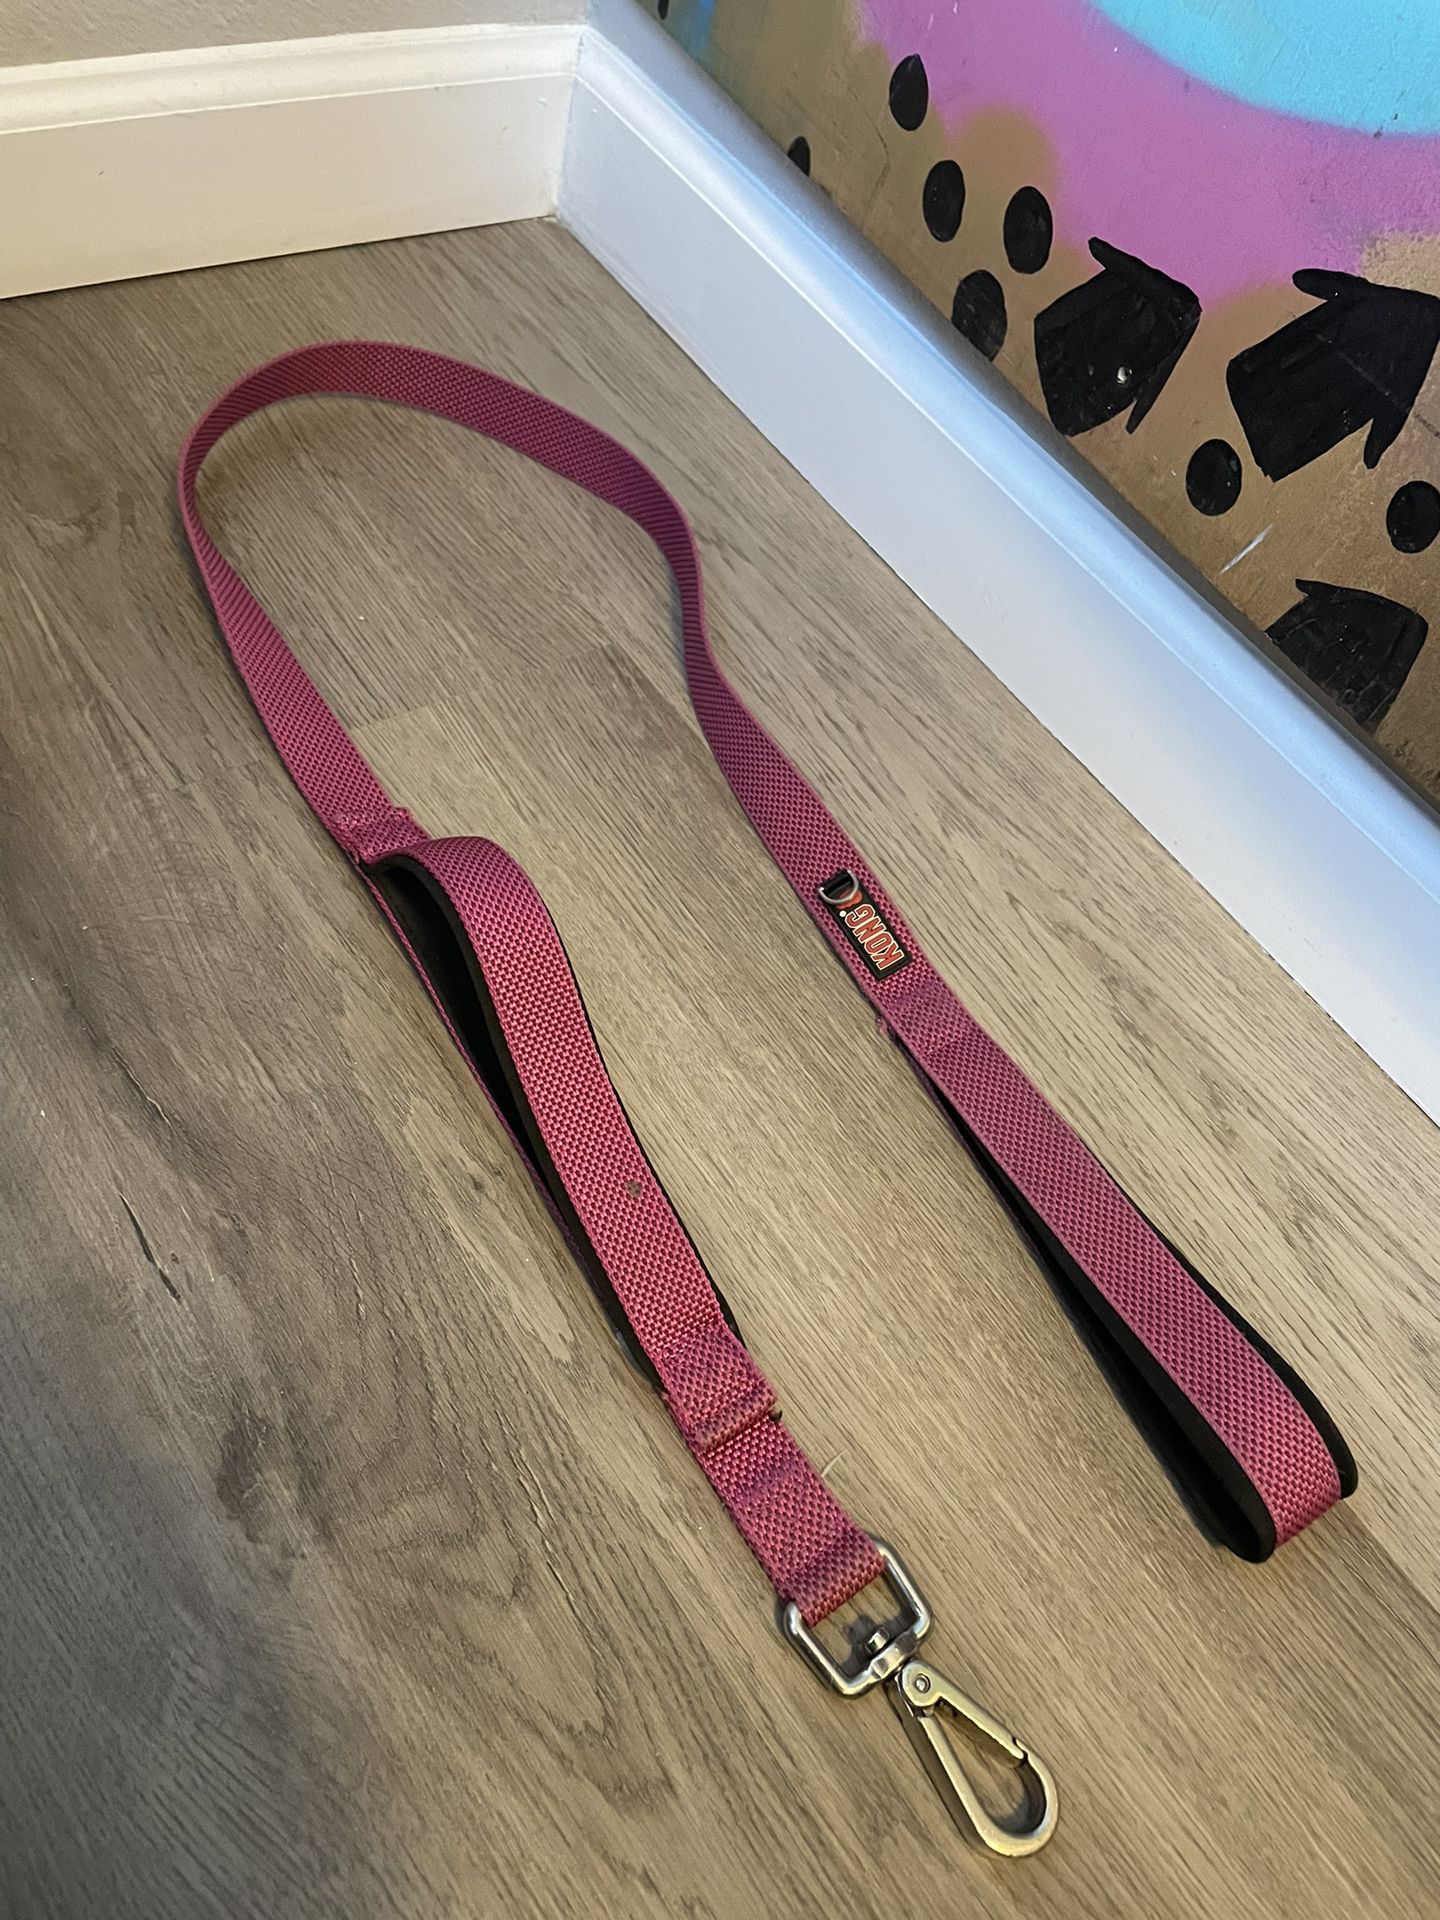 Kong Brand Dog Leash - Pink Reflective - 6 ft with Padded Handle